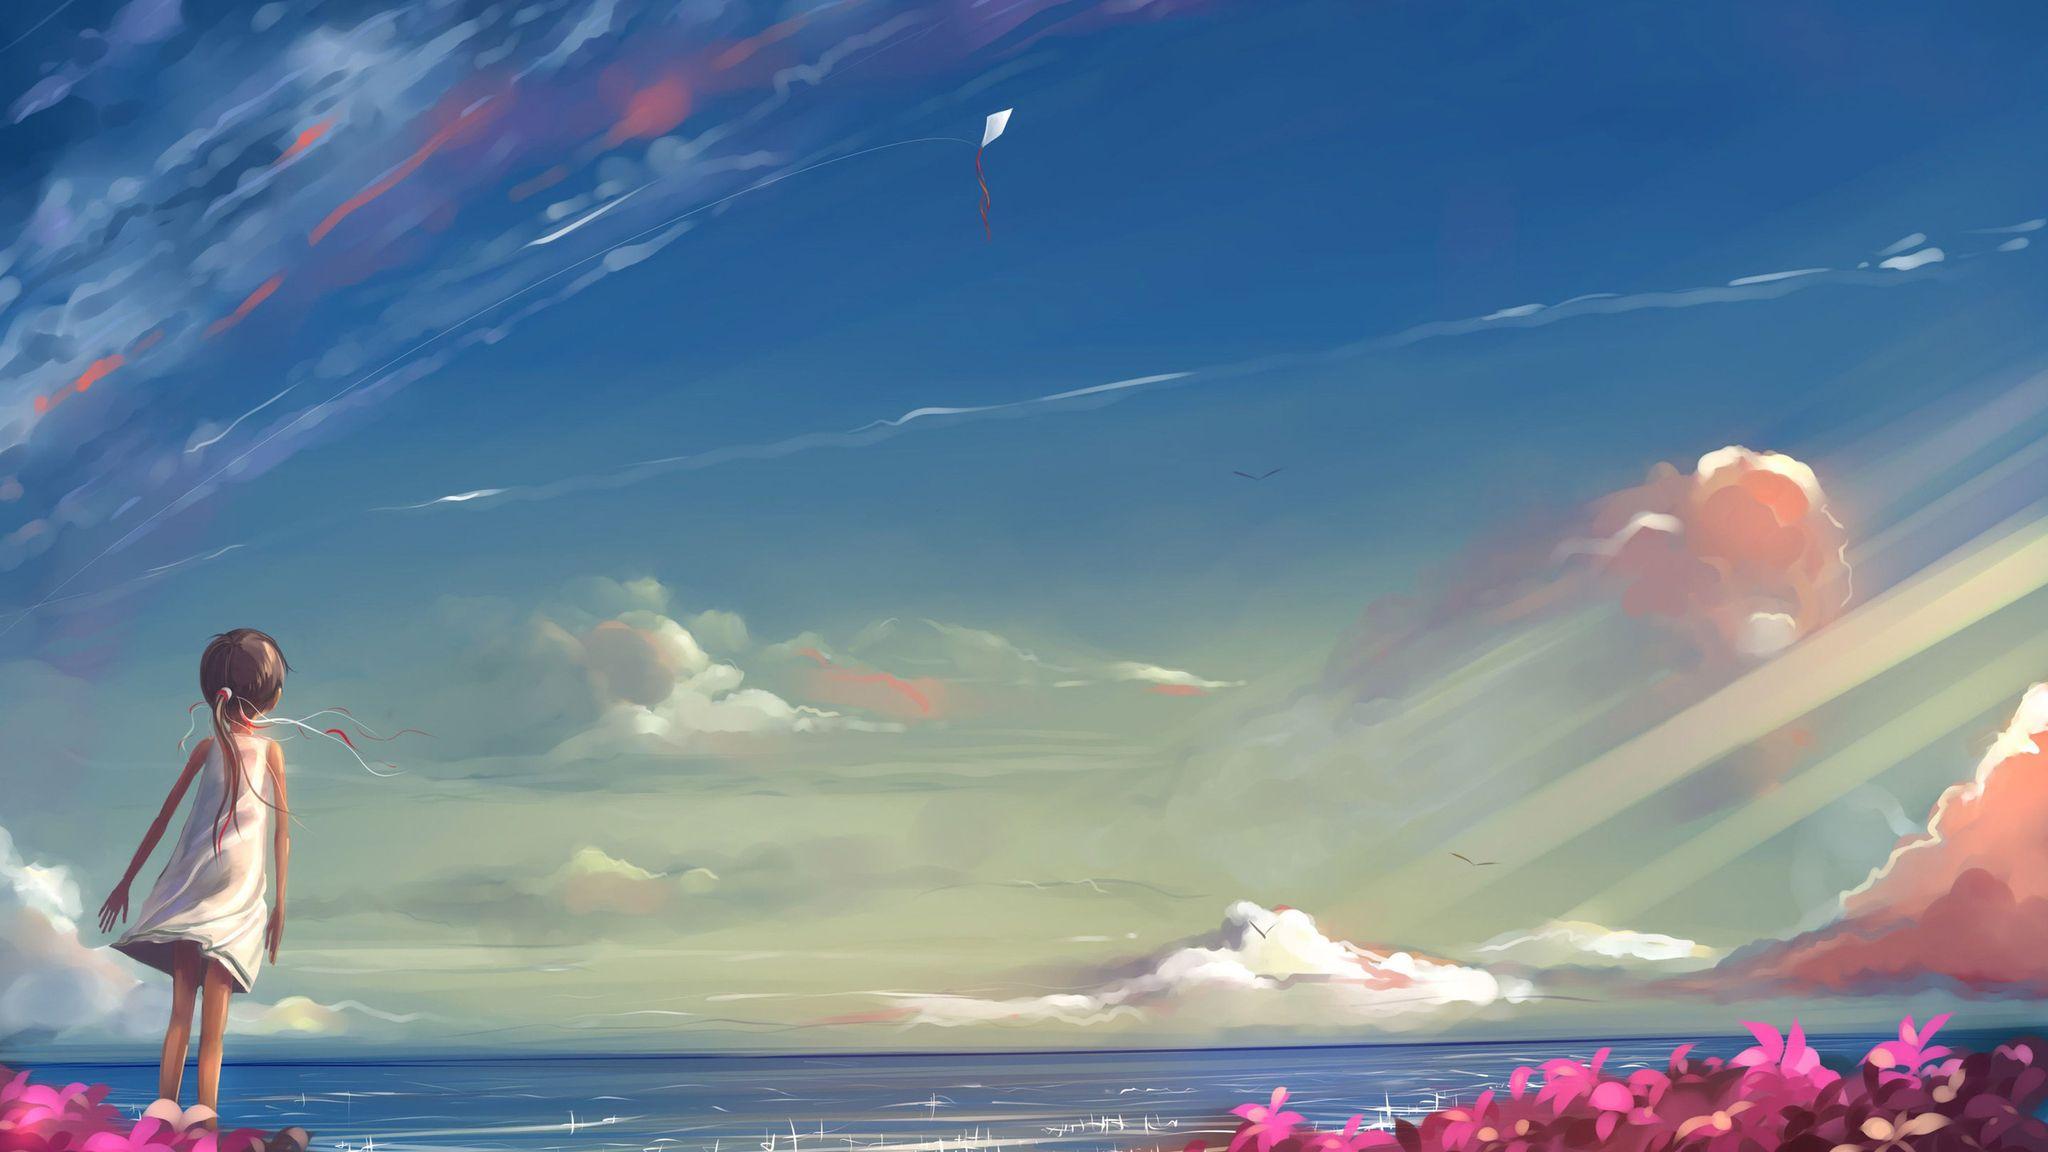 Anime Girl And Colorful Sky Wallpapers